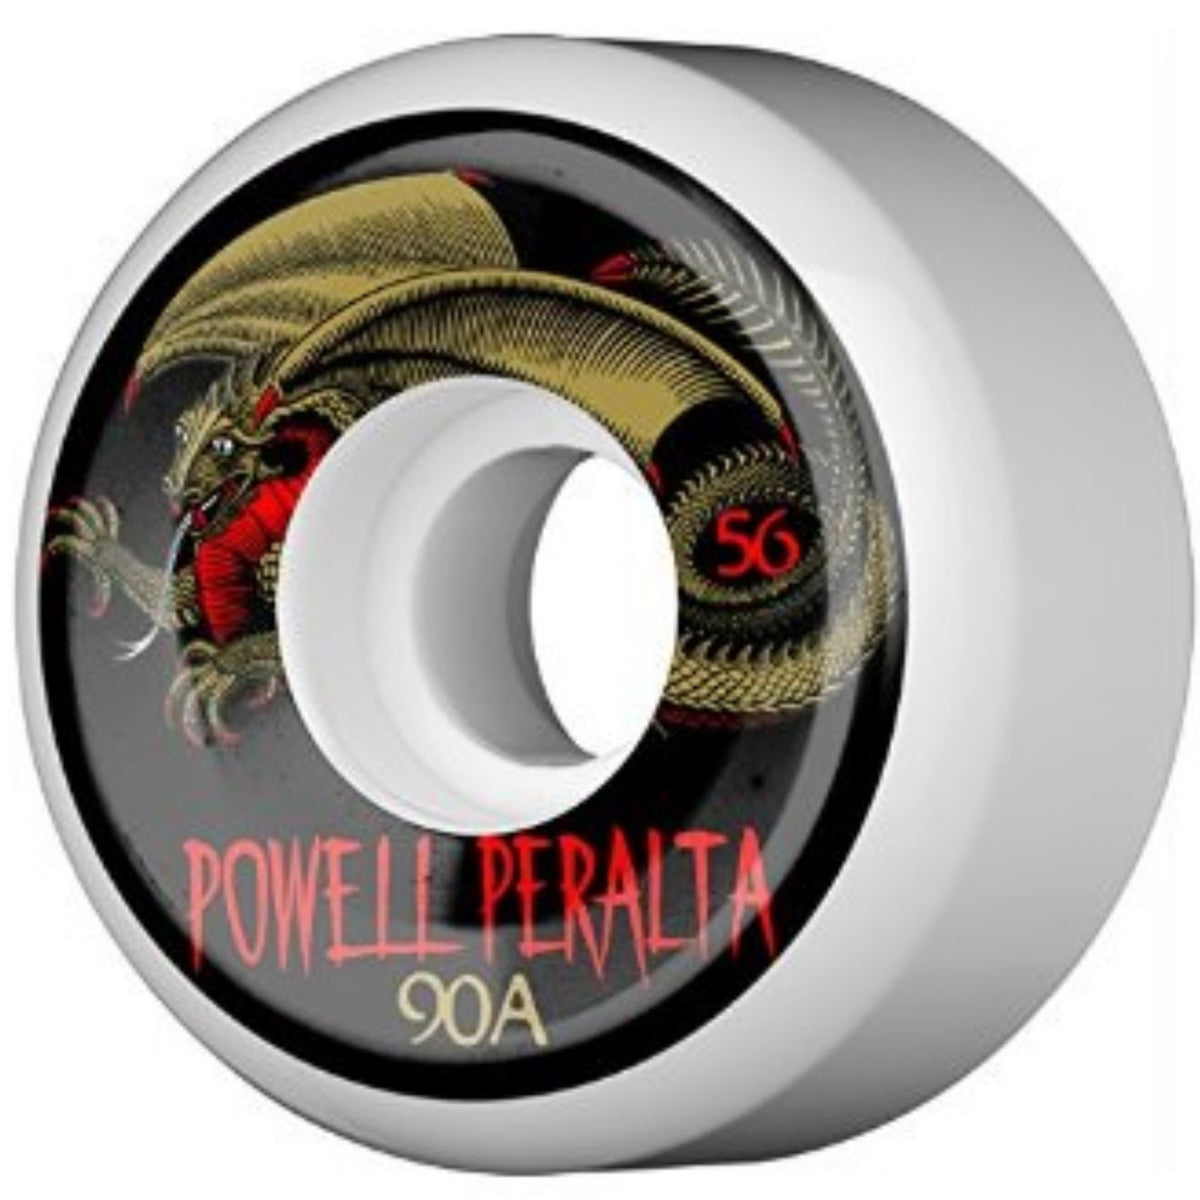 Powell-Peralta Oval Dragon Skateboard Wheels, 56mm 90a